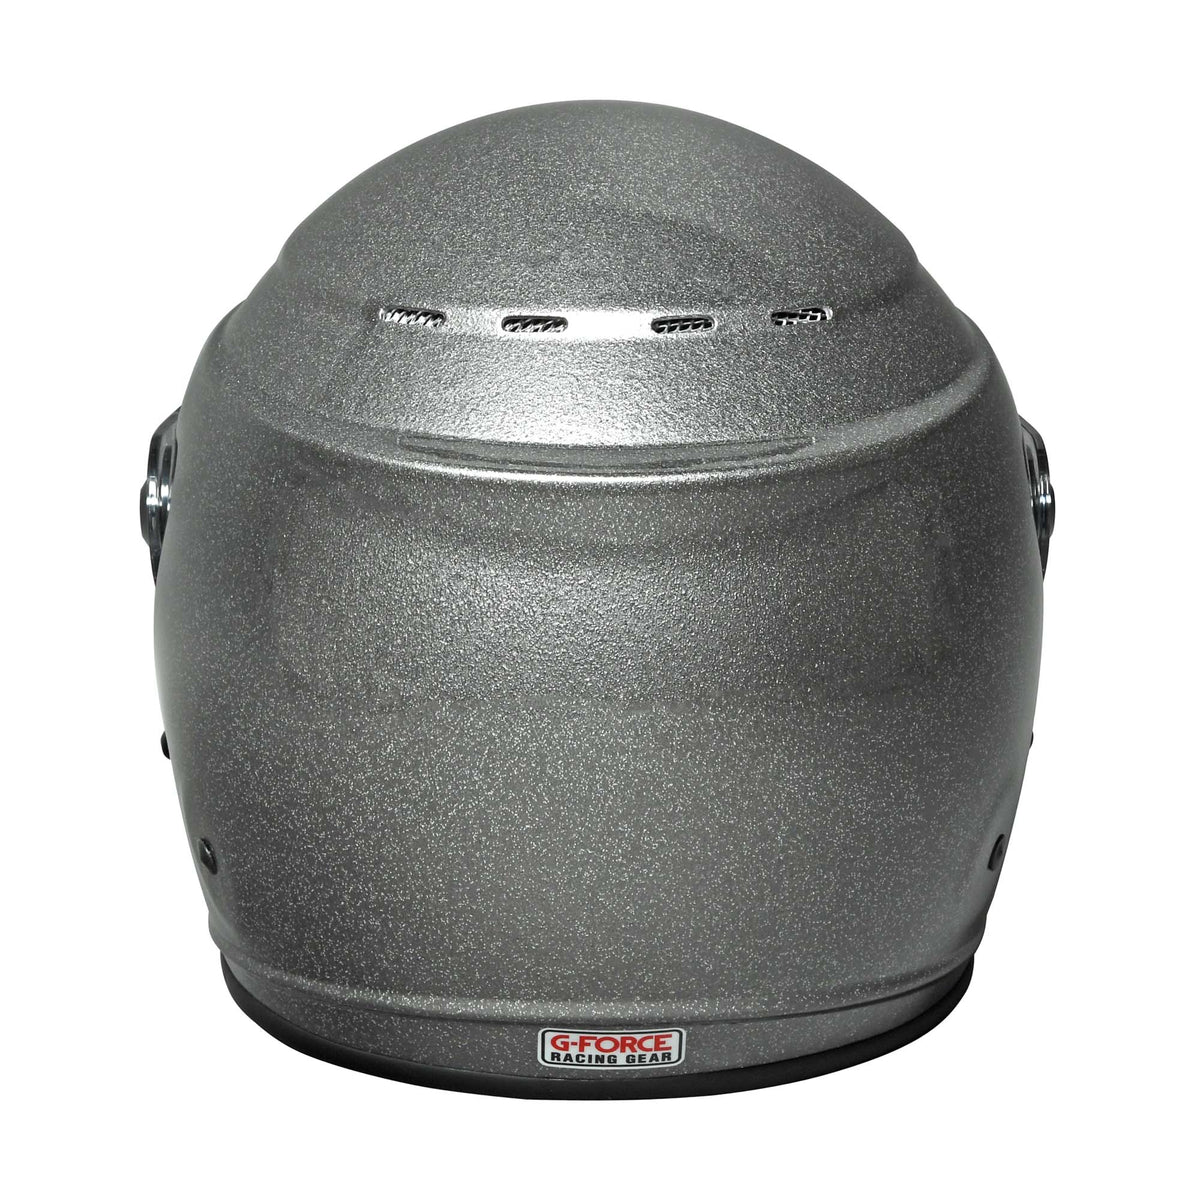 G-Force Revo Flash SA2020 Helmet